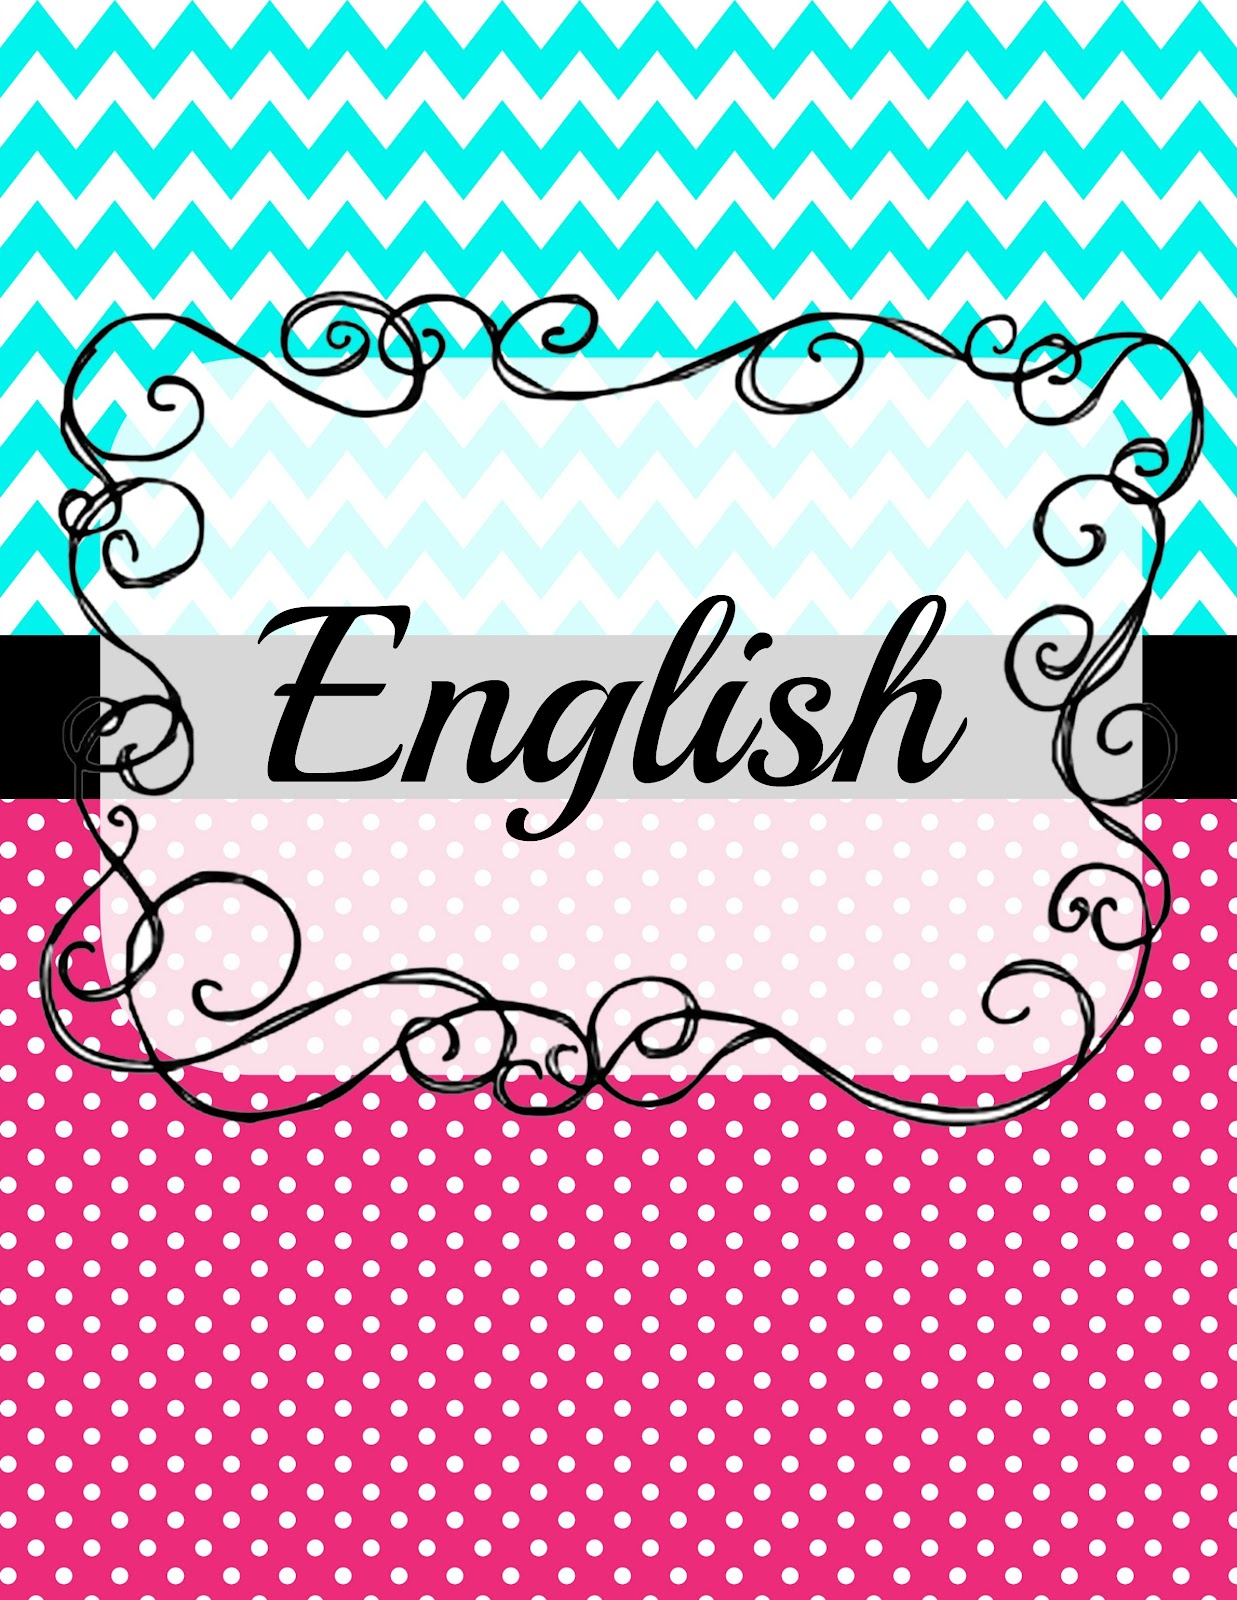 english binder cover